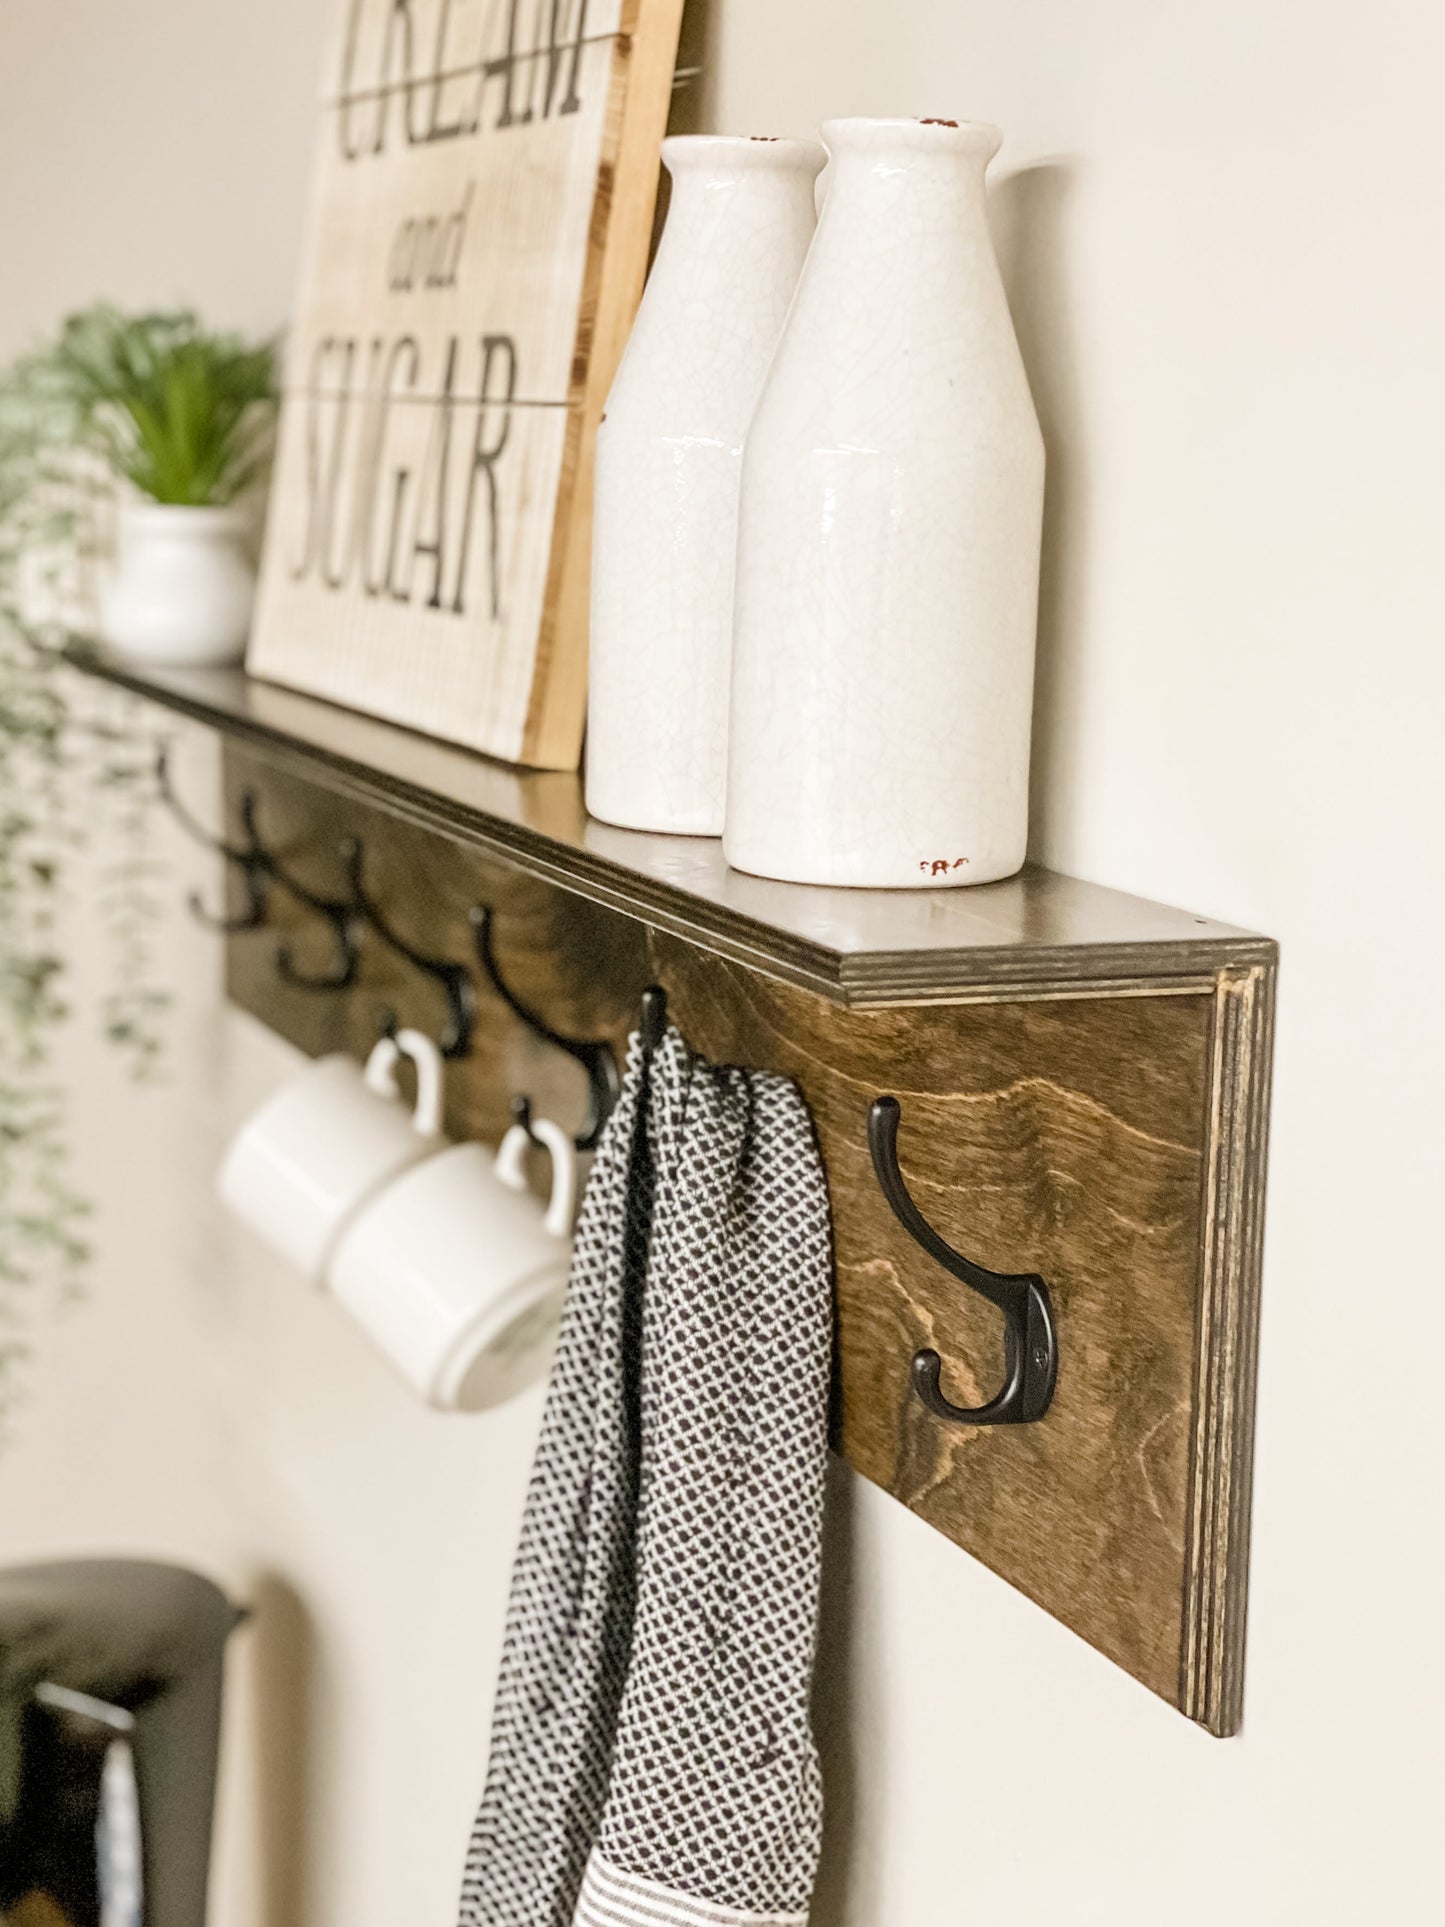 Coat Rack with Shelf in Dark Brown for Living Room, Entry Way, Mudroom, Etc.